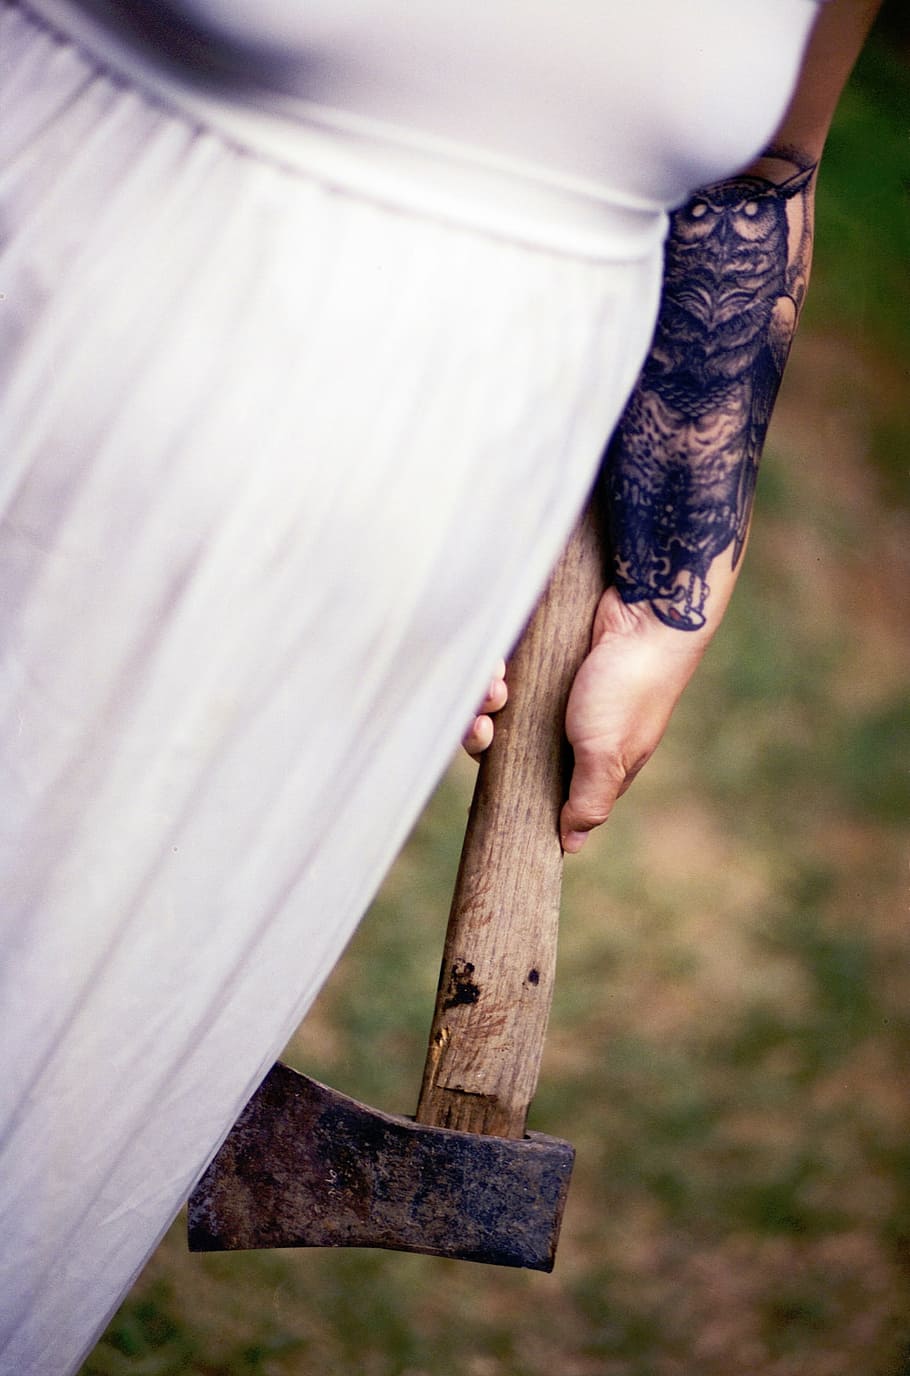 persona con hacha, arma, madera, hacha, personas, mano, búho, tatuaje, mano humana, una persona